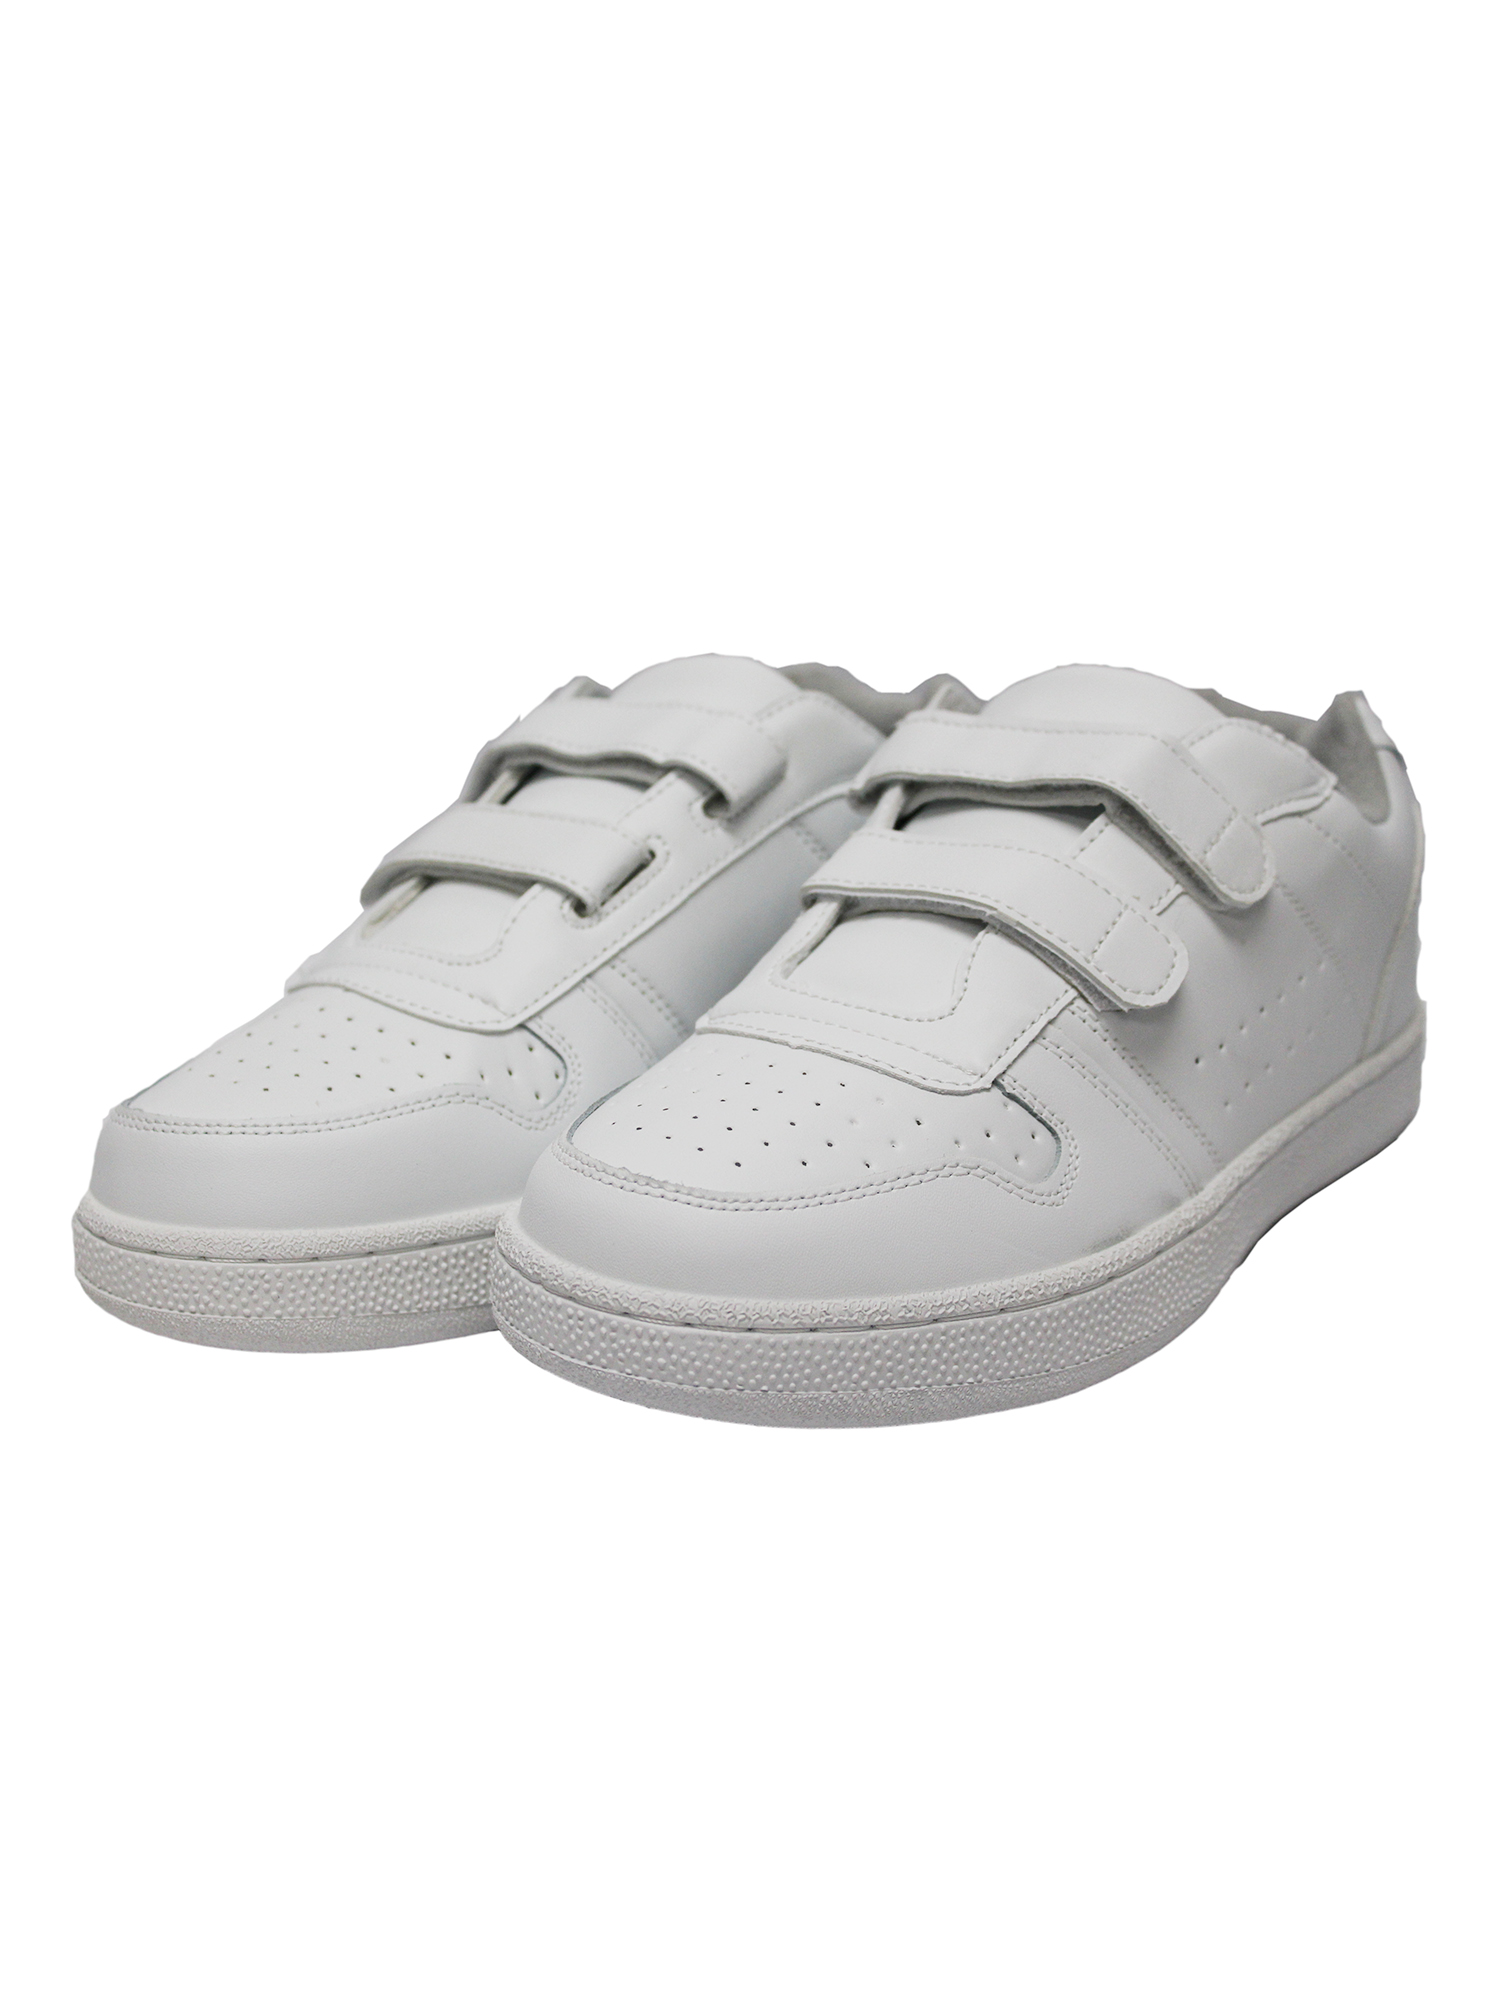 Tanleewa Men's Leather Strap Sneakers Lightweight Hook and Loop Walking Shoe Size 8 Adult Male - image 2 of 5